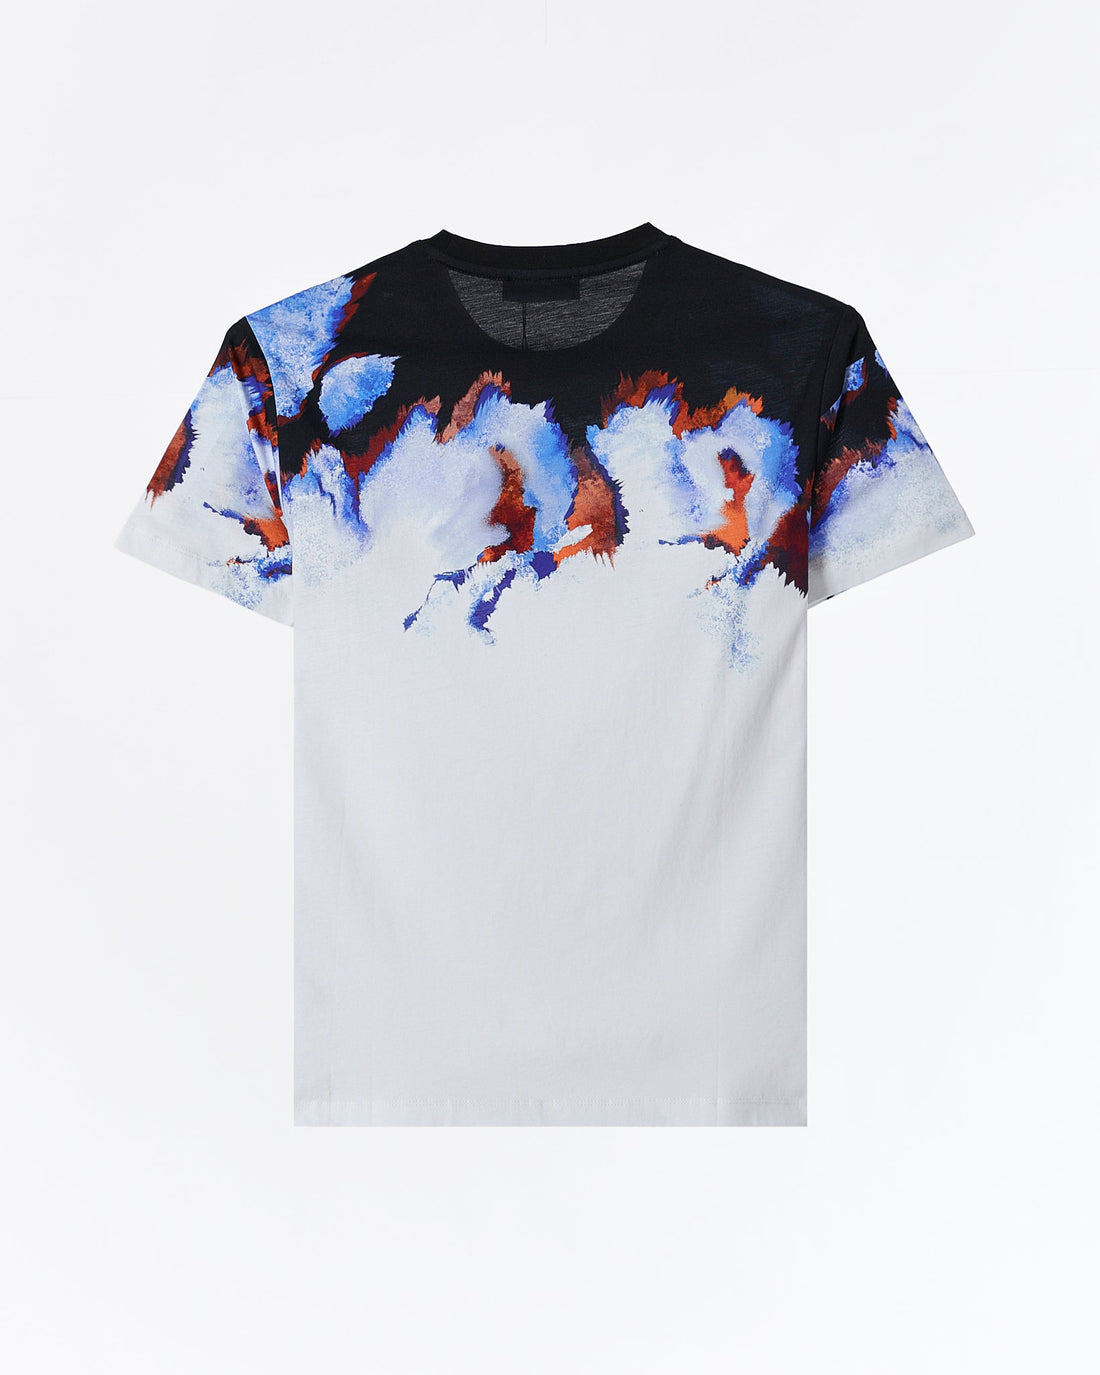 MOI OUTFIT-FF Gradient Color Printed Men T-Shirt 54.90